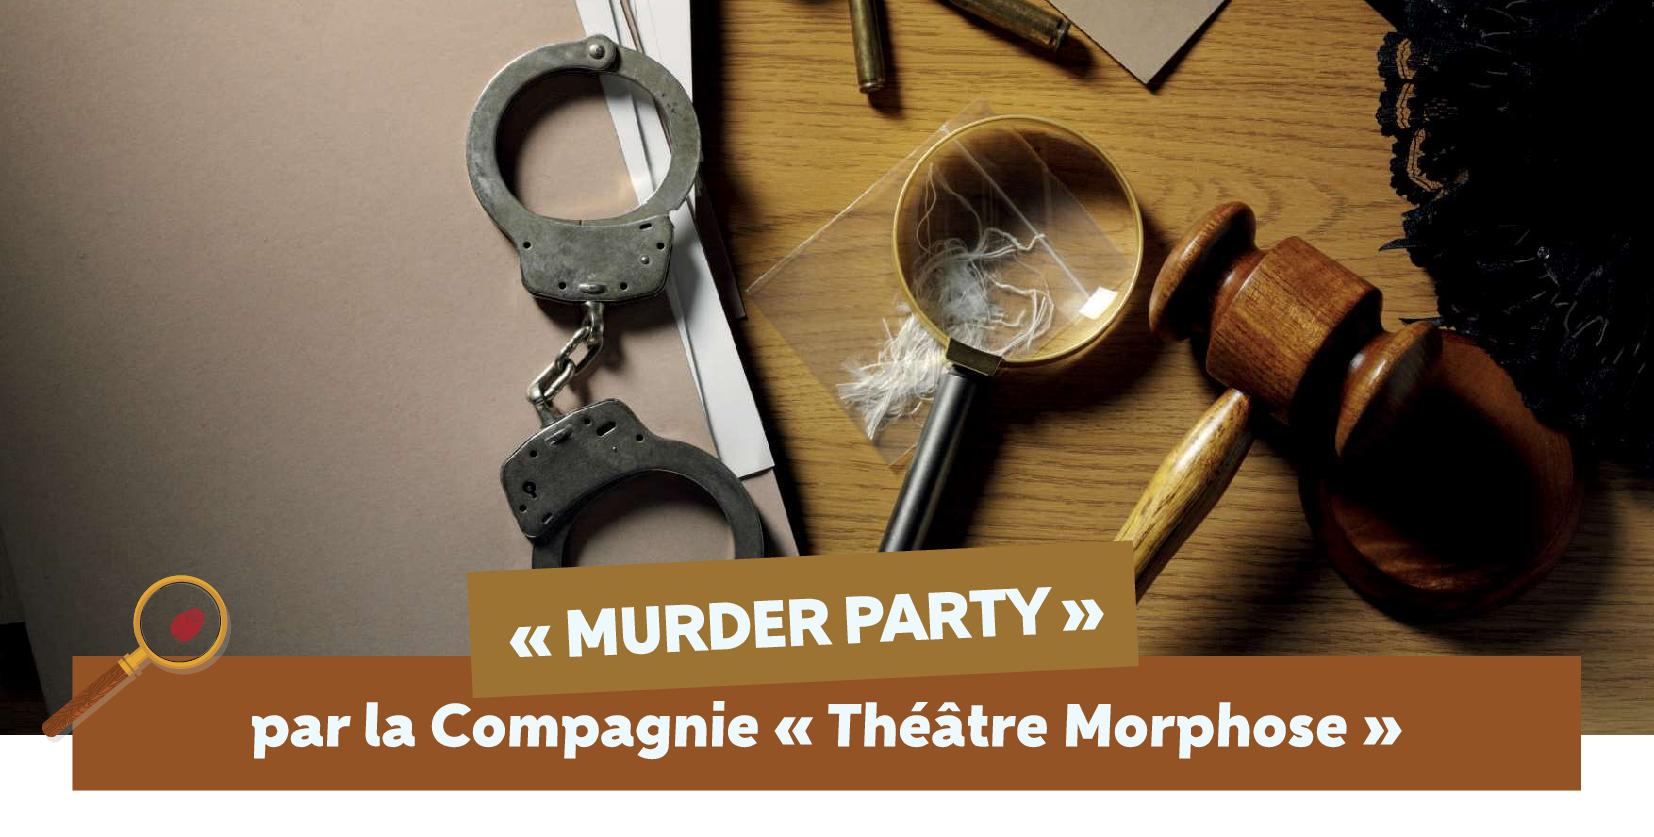 Musée des Merveilles : "Murder party"